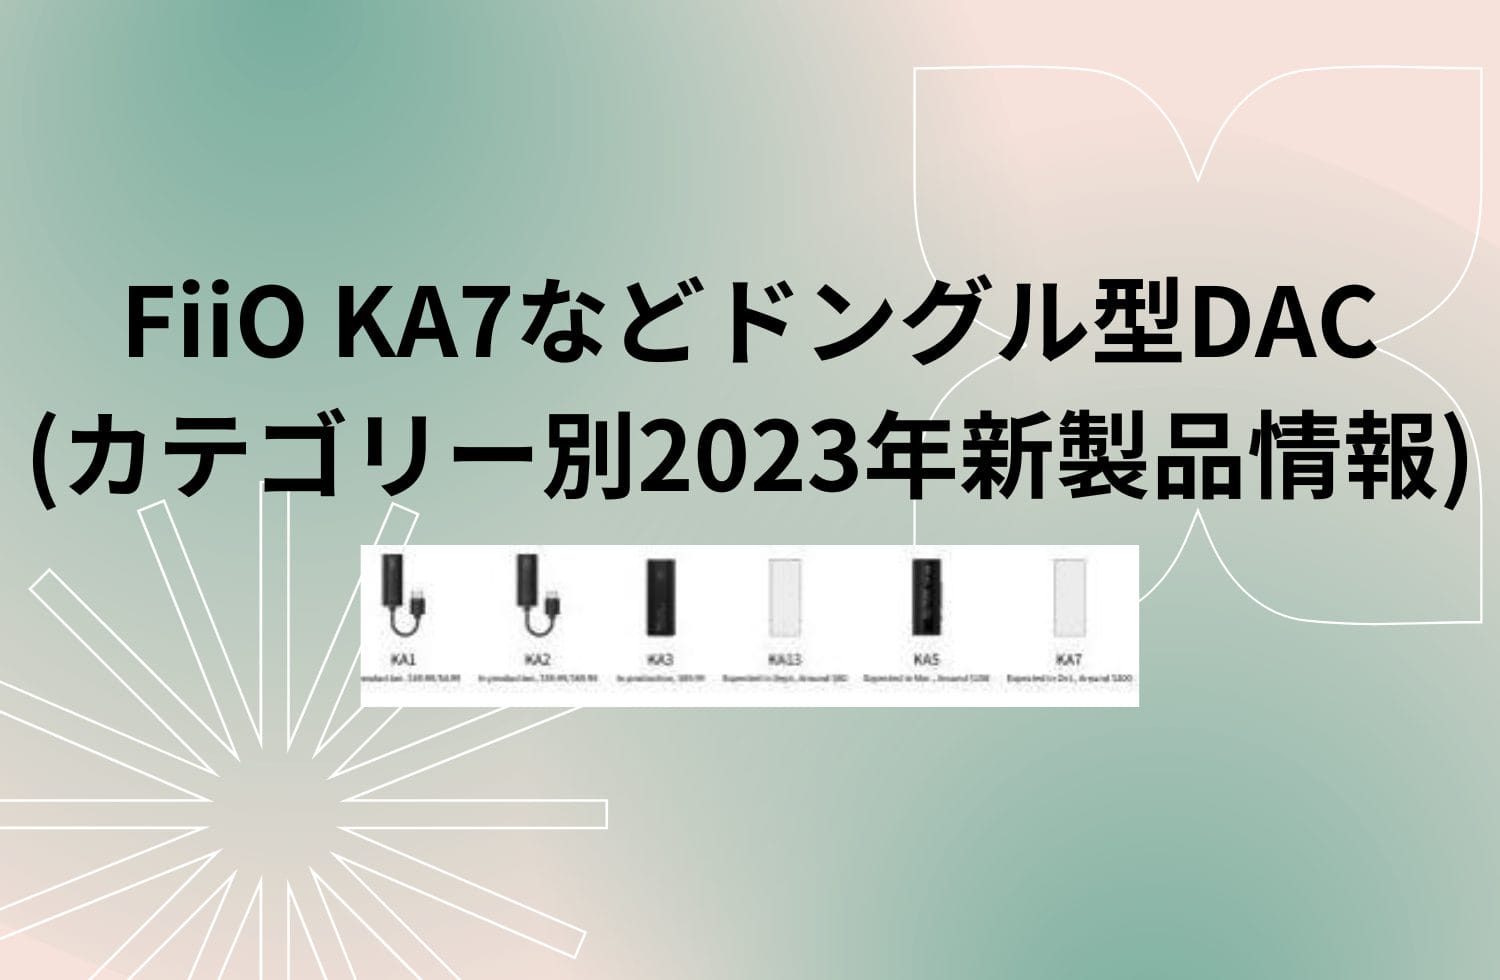 Fiio Ka7などドングル型dacv2 (カテゴリー別2023年新製品情報)